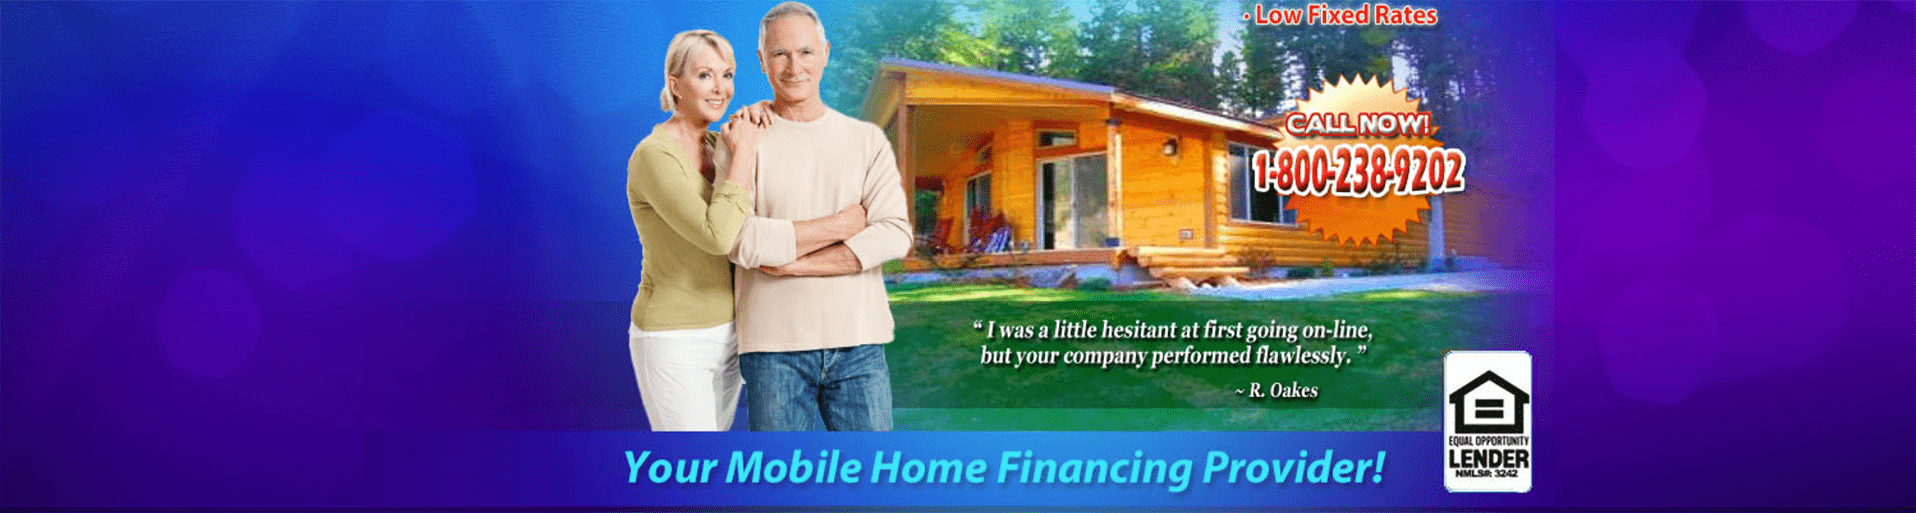 used mobile home mortgage calculator